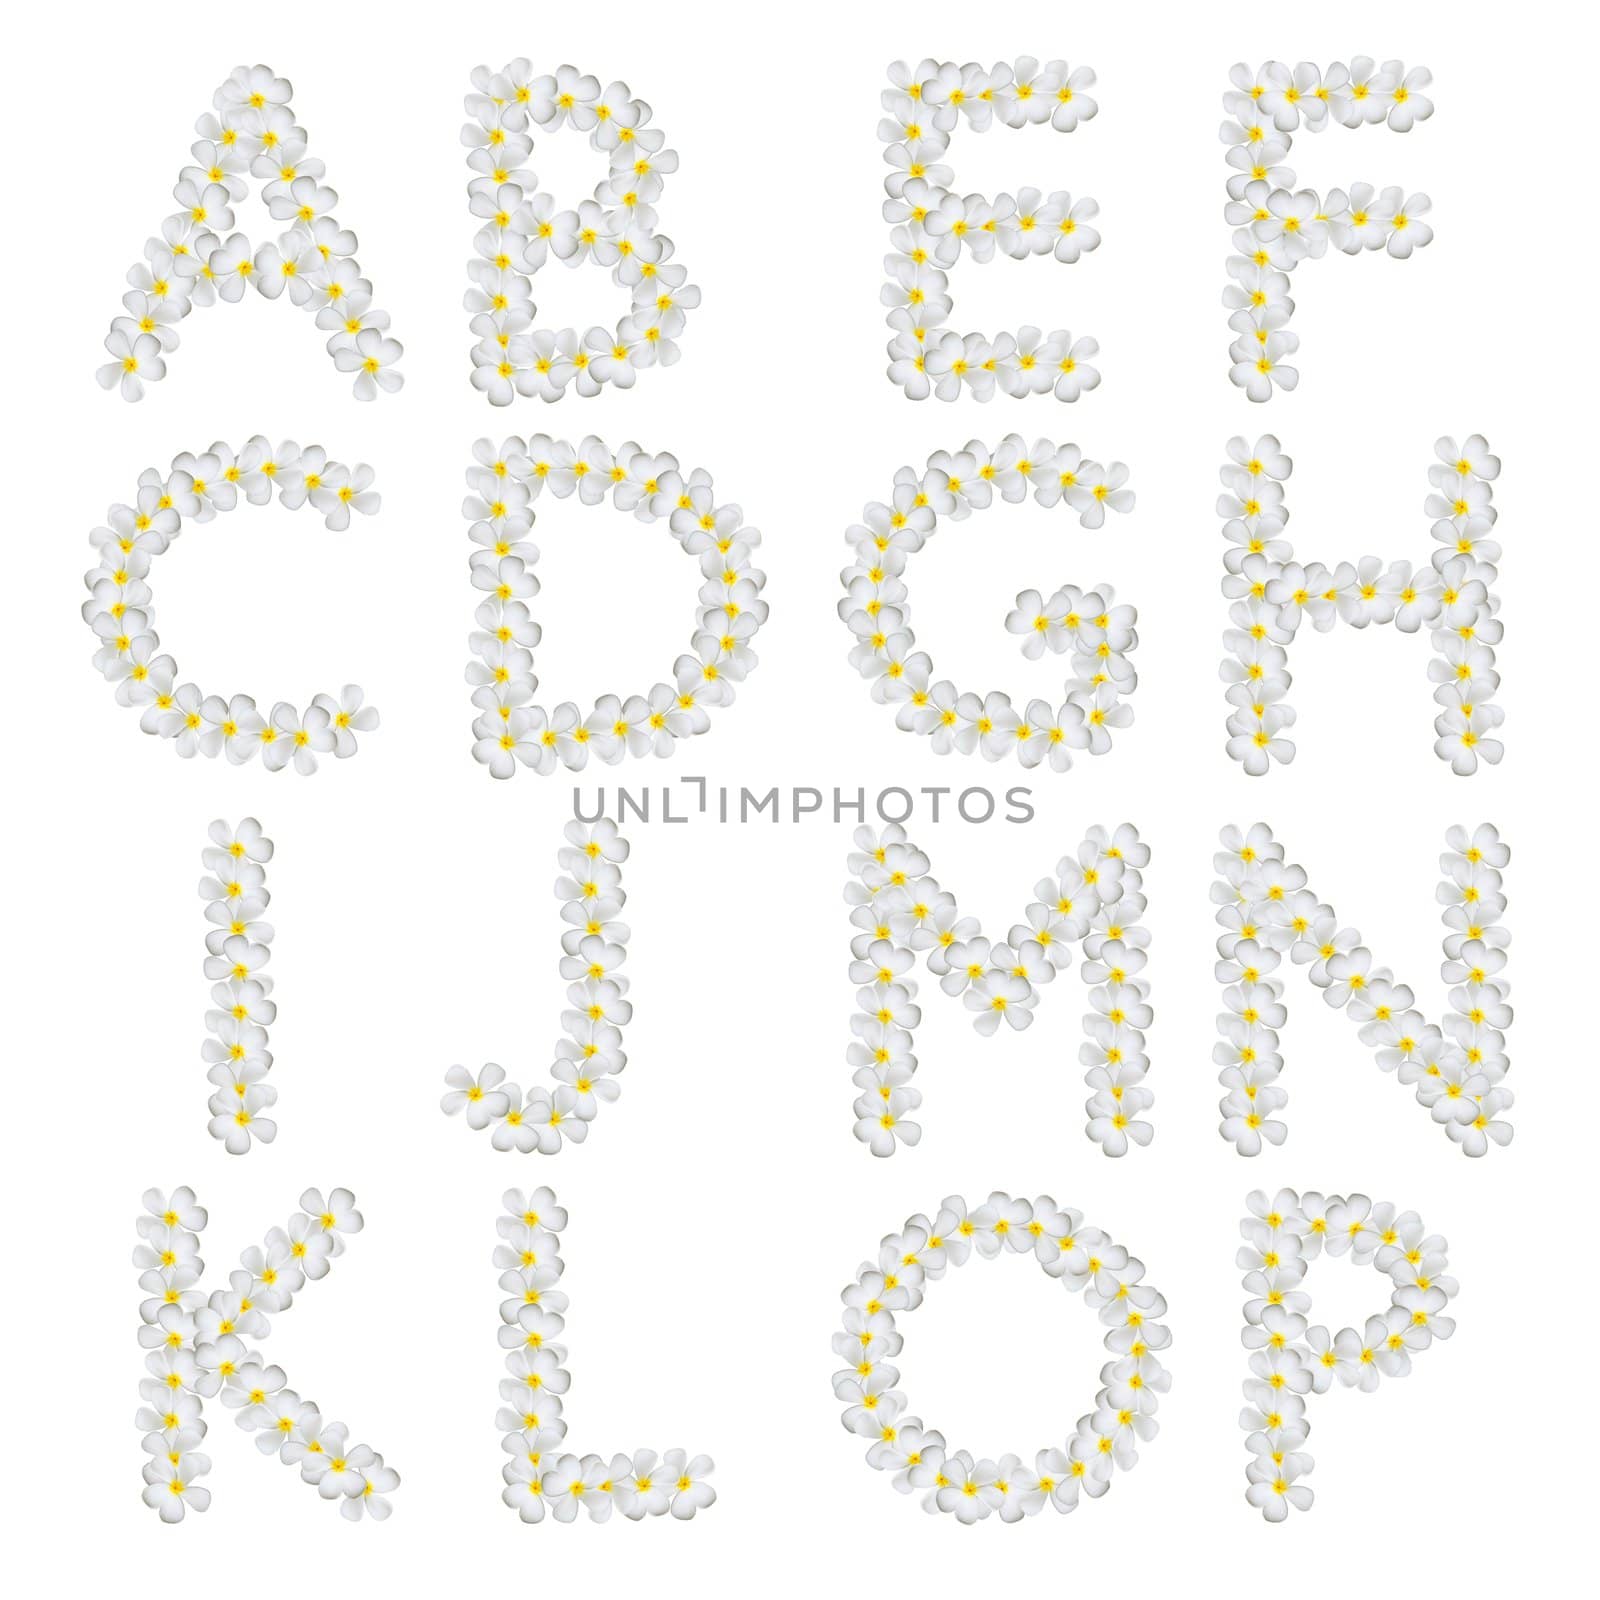 Plumeria alphabet isolated on white background